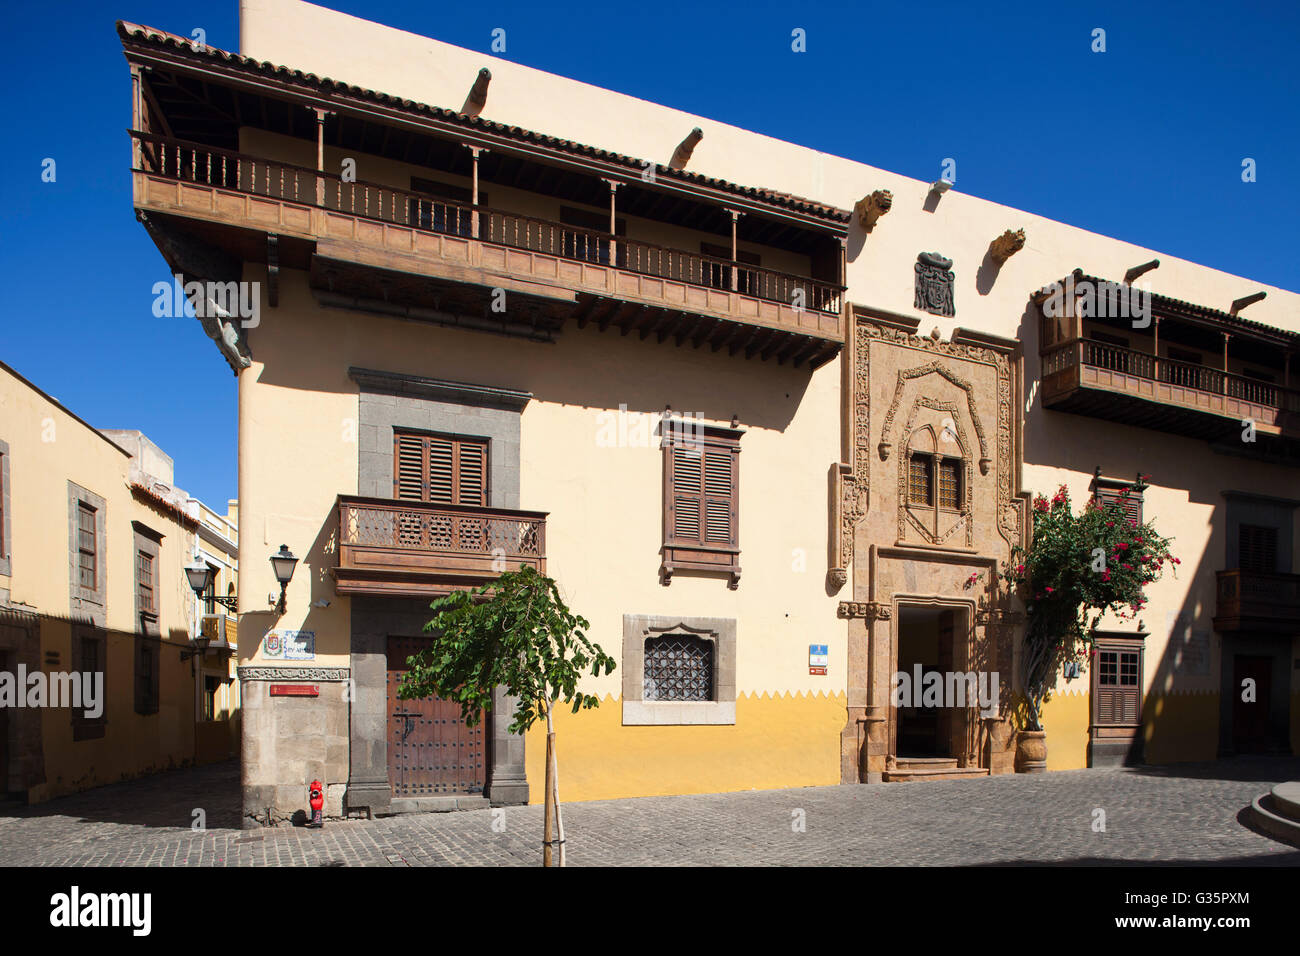 Casa de Colon, Vegueta quarter, Las Palmas de Gran Canaria town, Gran Canaria island, Canary archipelago, Spain, Europe Stock Photo